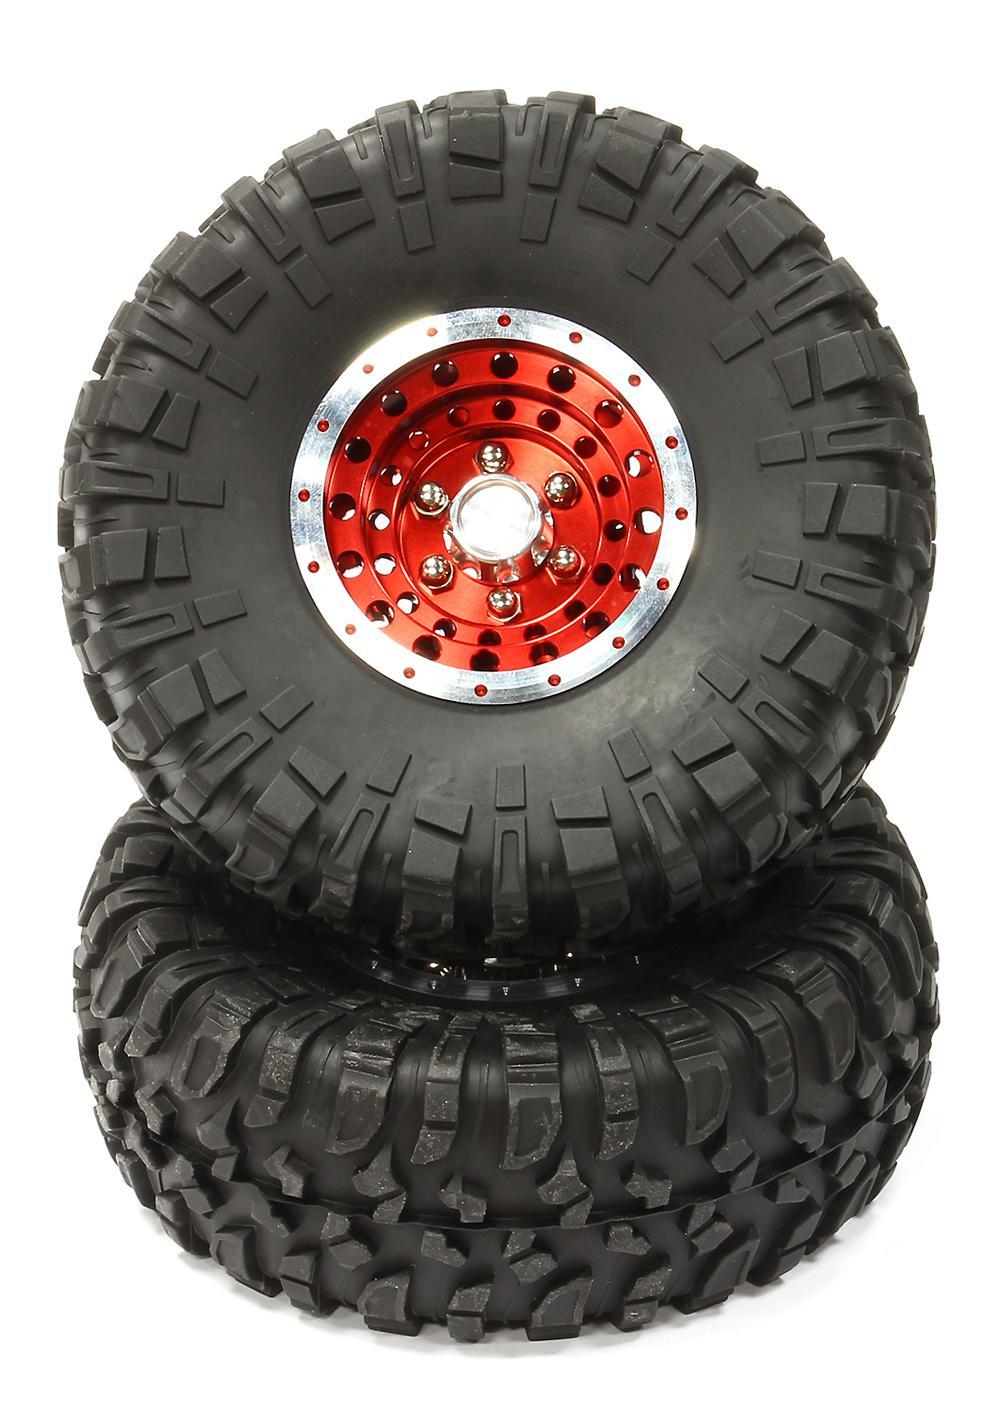 Billet Machined X4 Spoke 2.2 Wheel & Tire Set (2) for Rock Crawler (O.D.=132mm) C24871RED